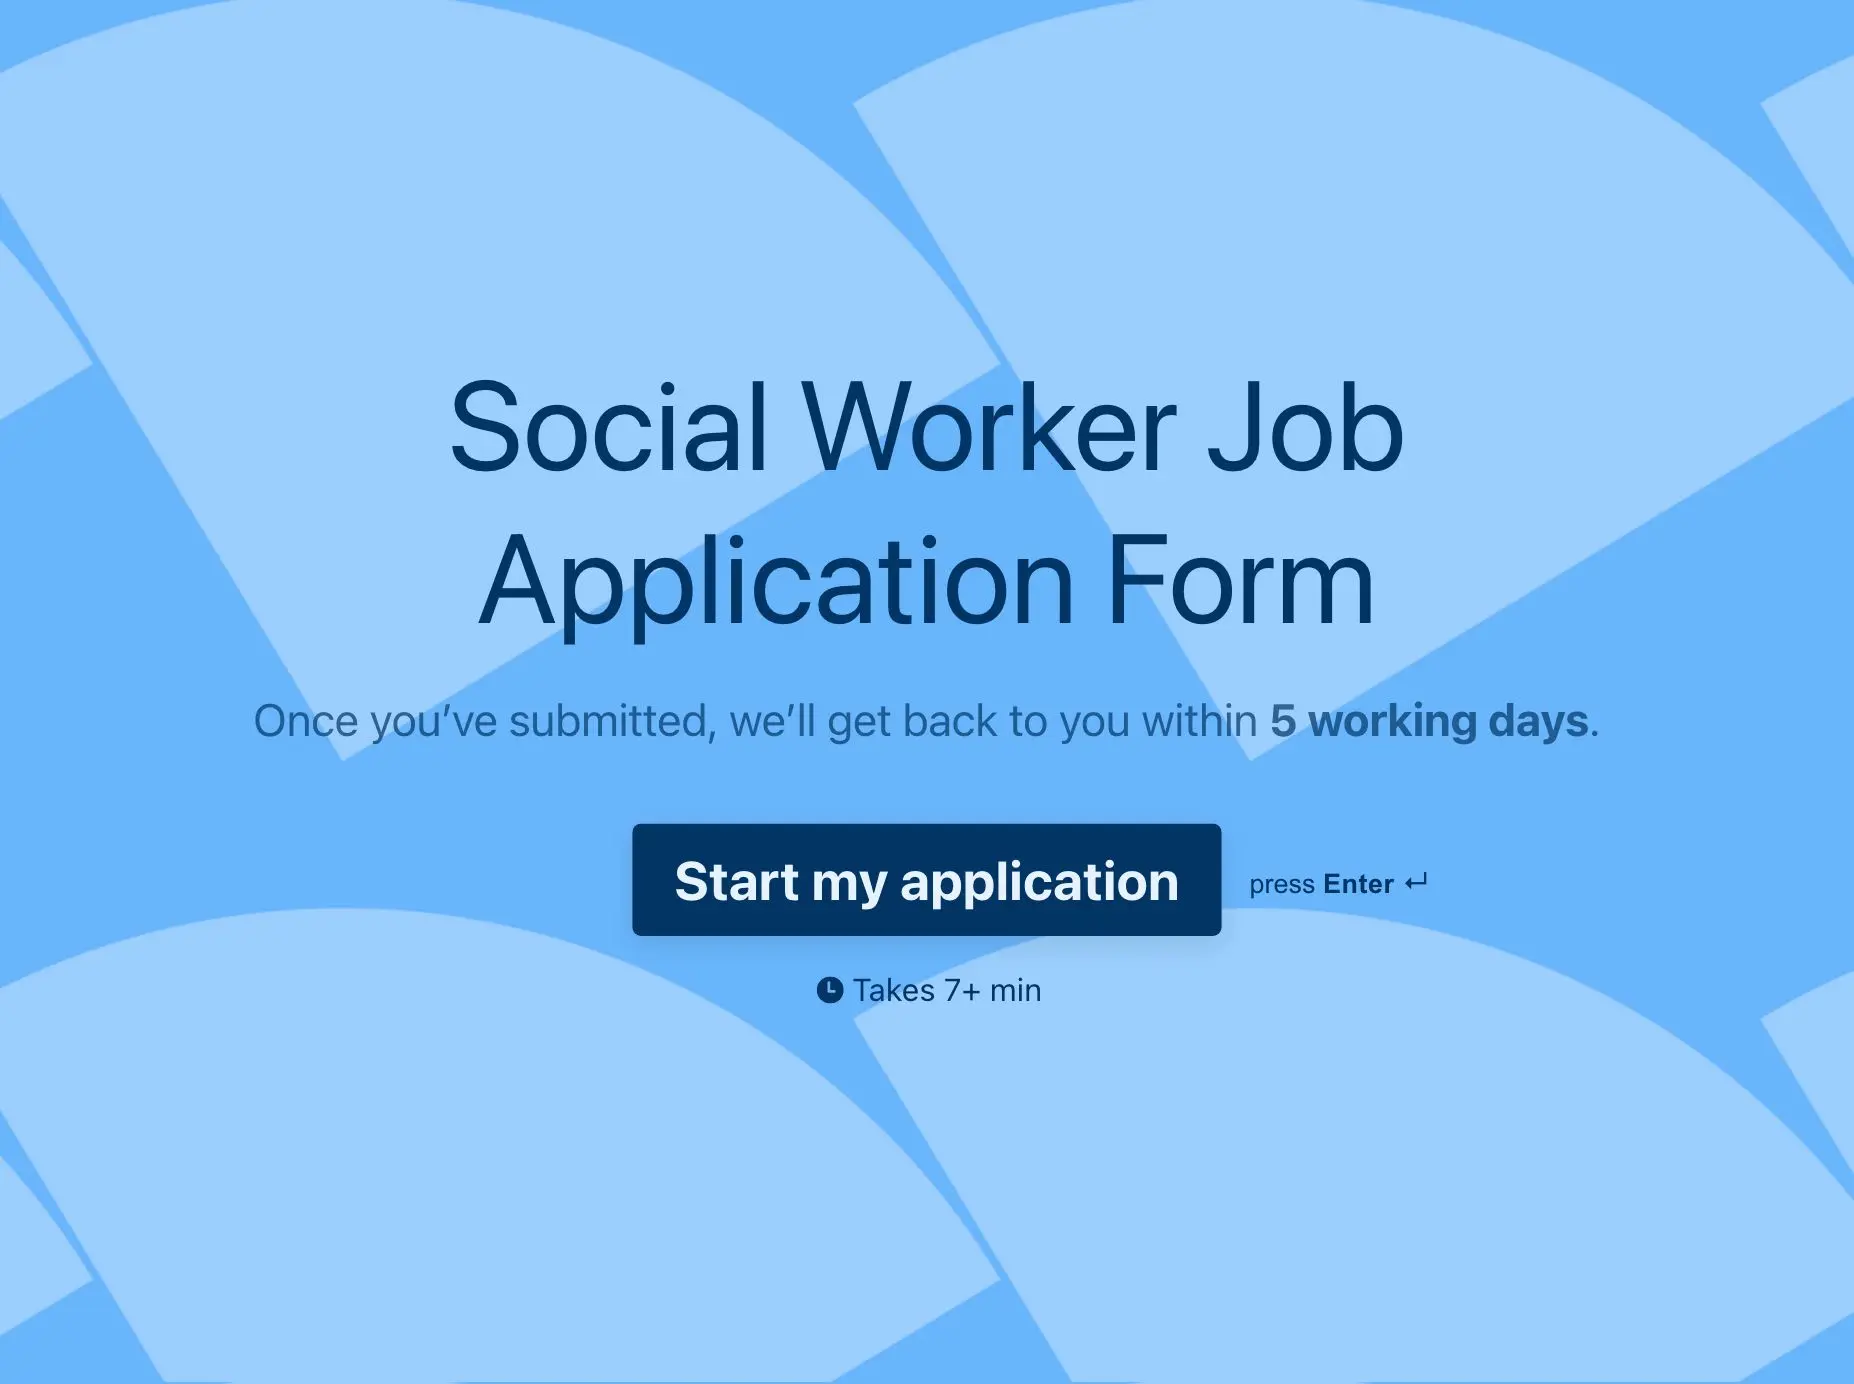 Social Worker Job Application Form Template Hero